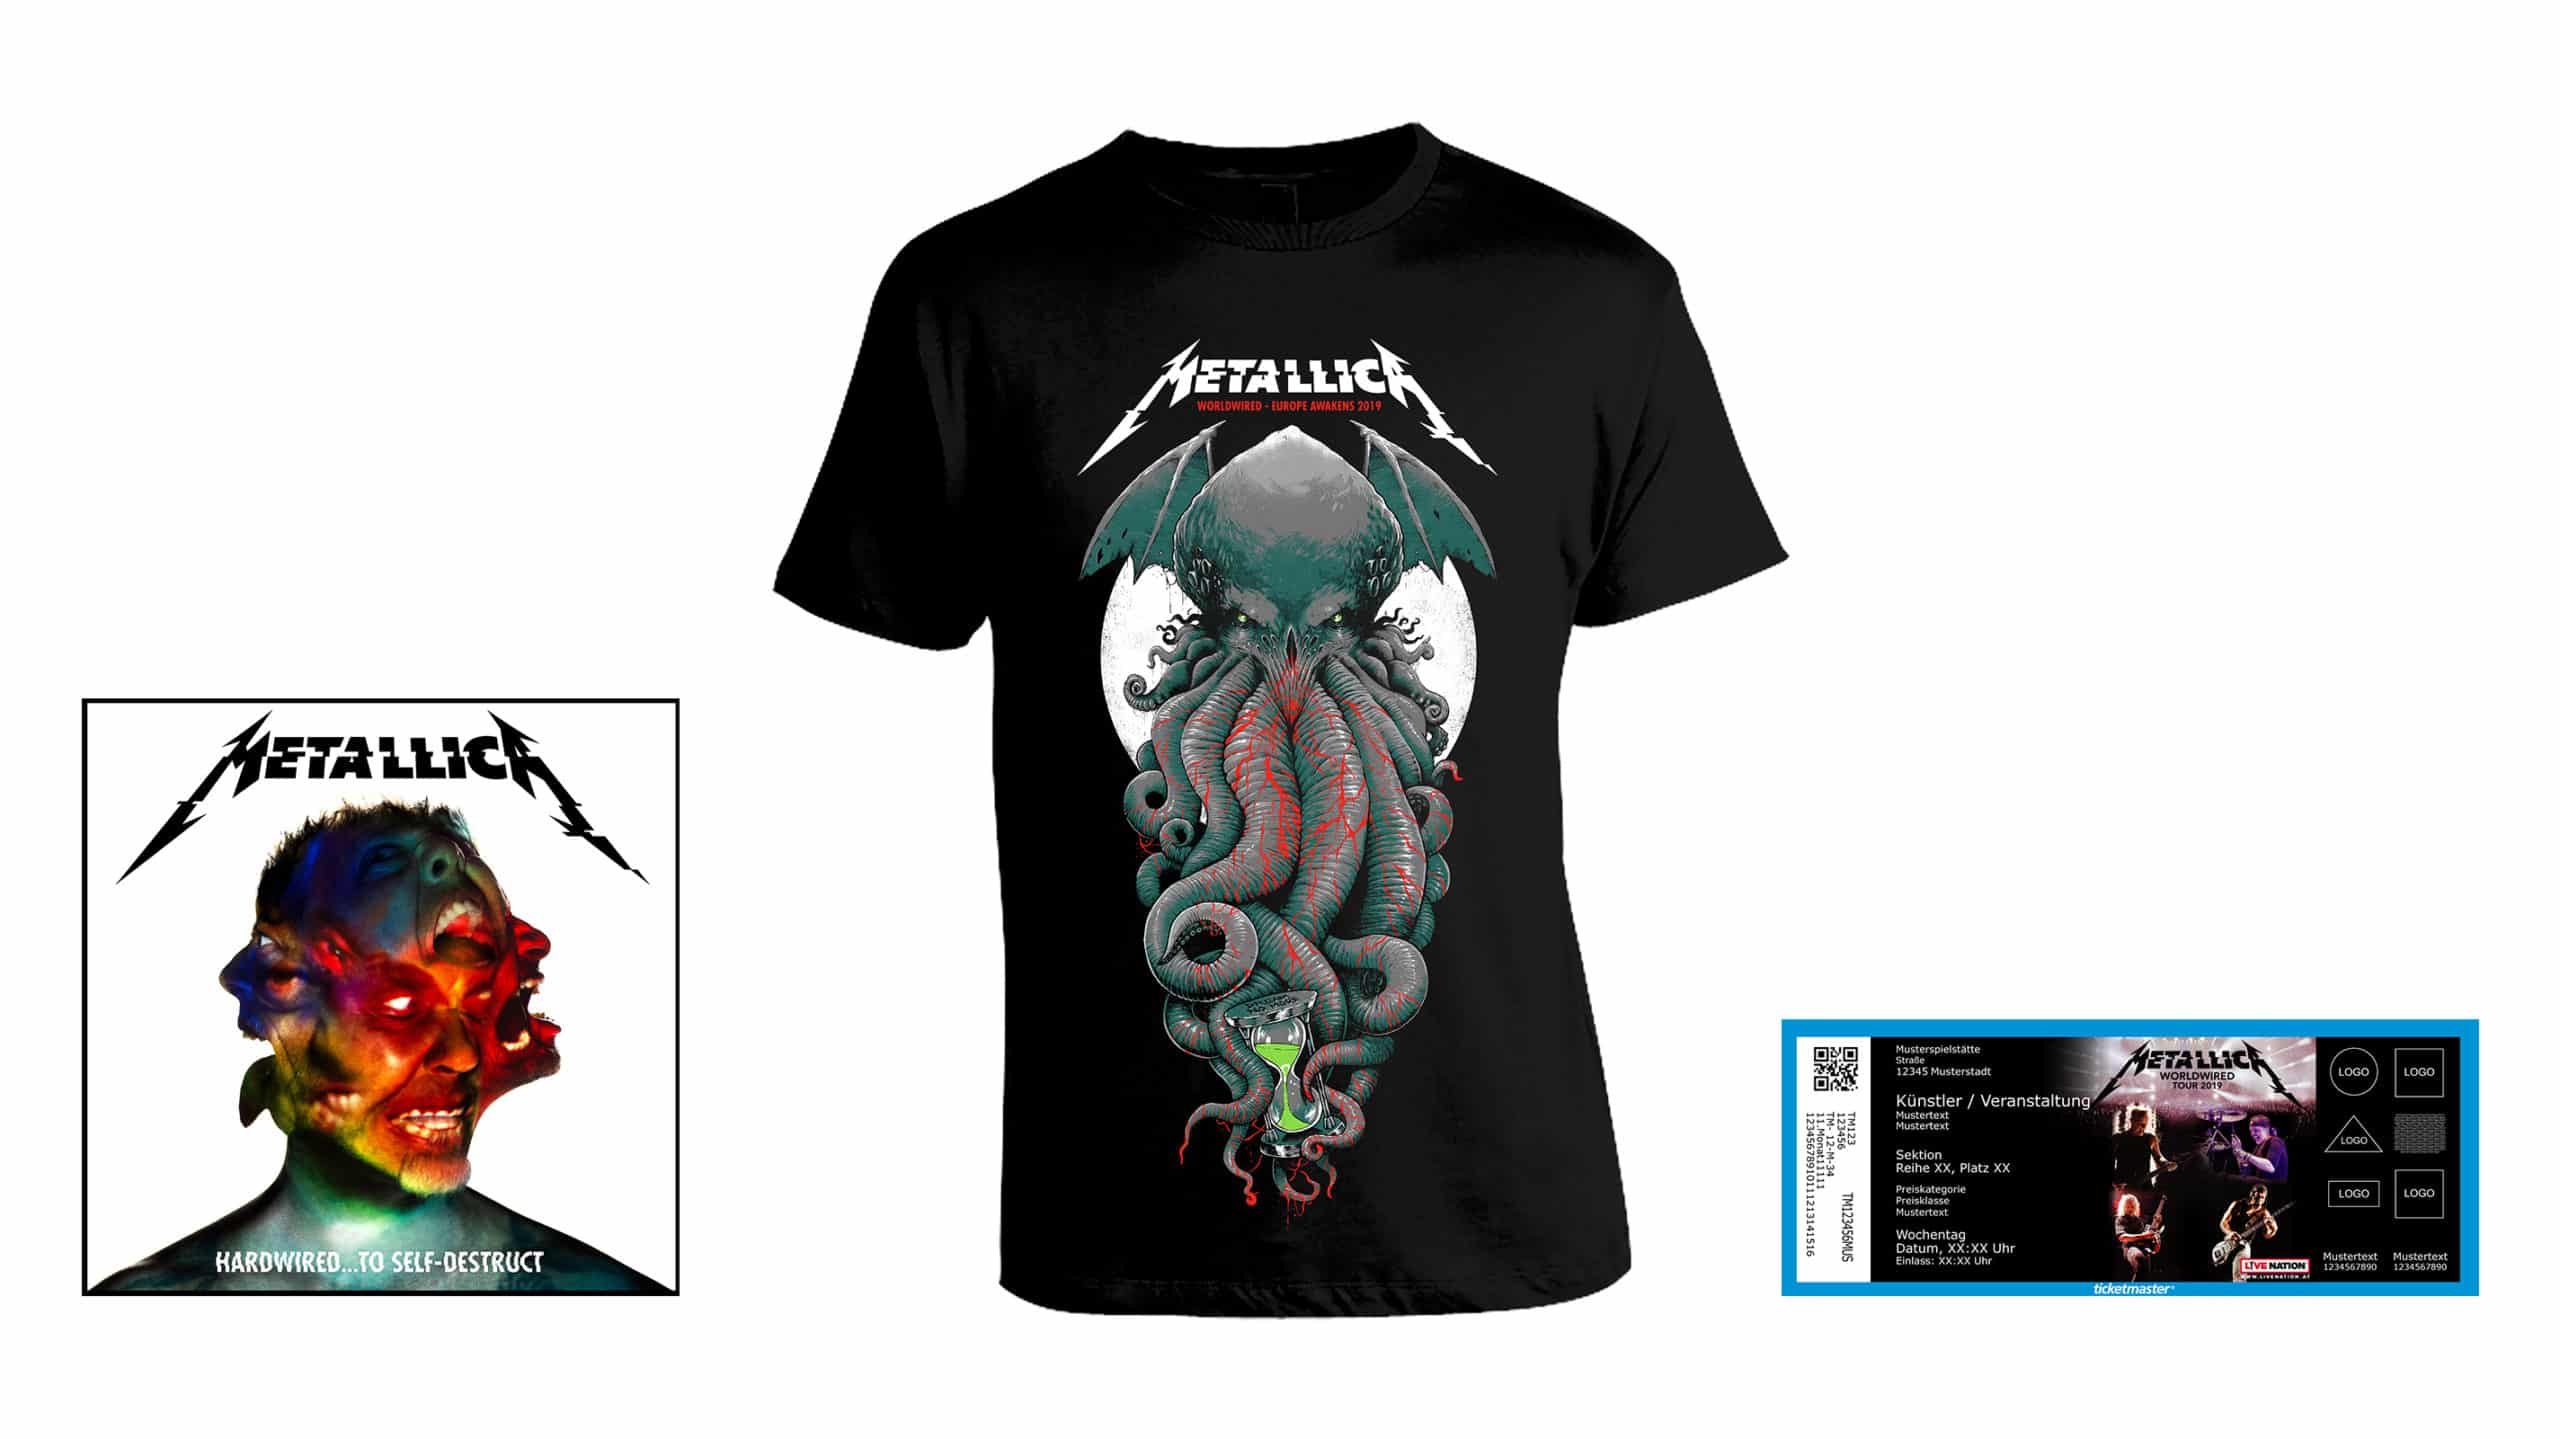 metallica Tour 2019 merchandise